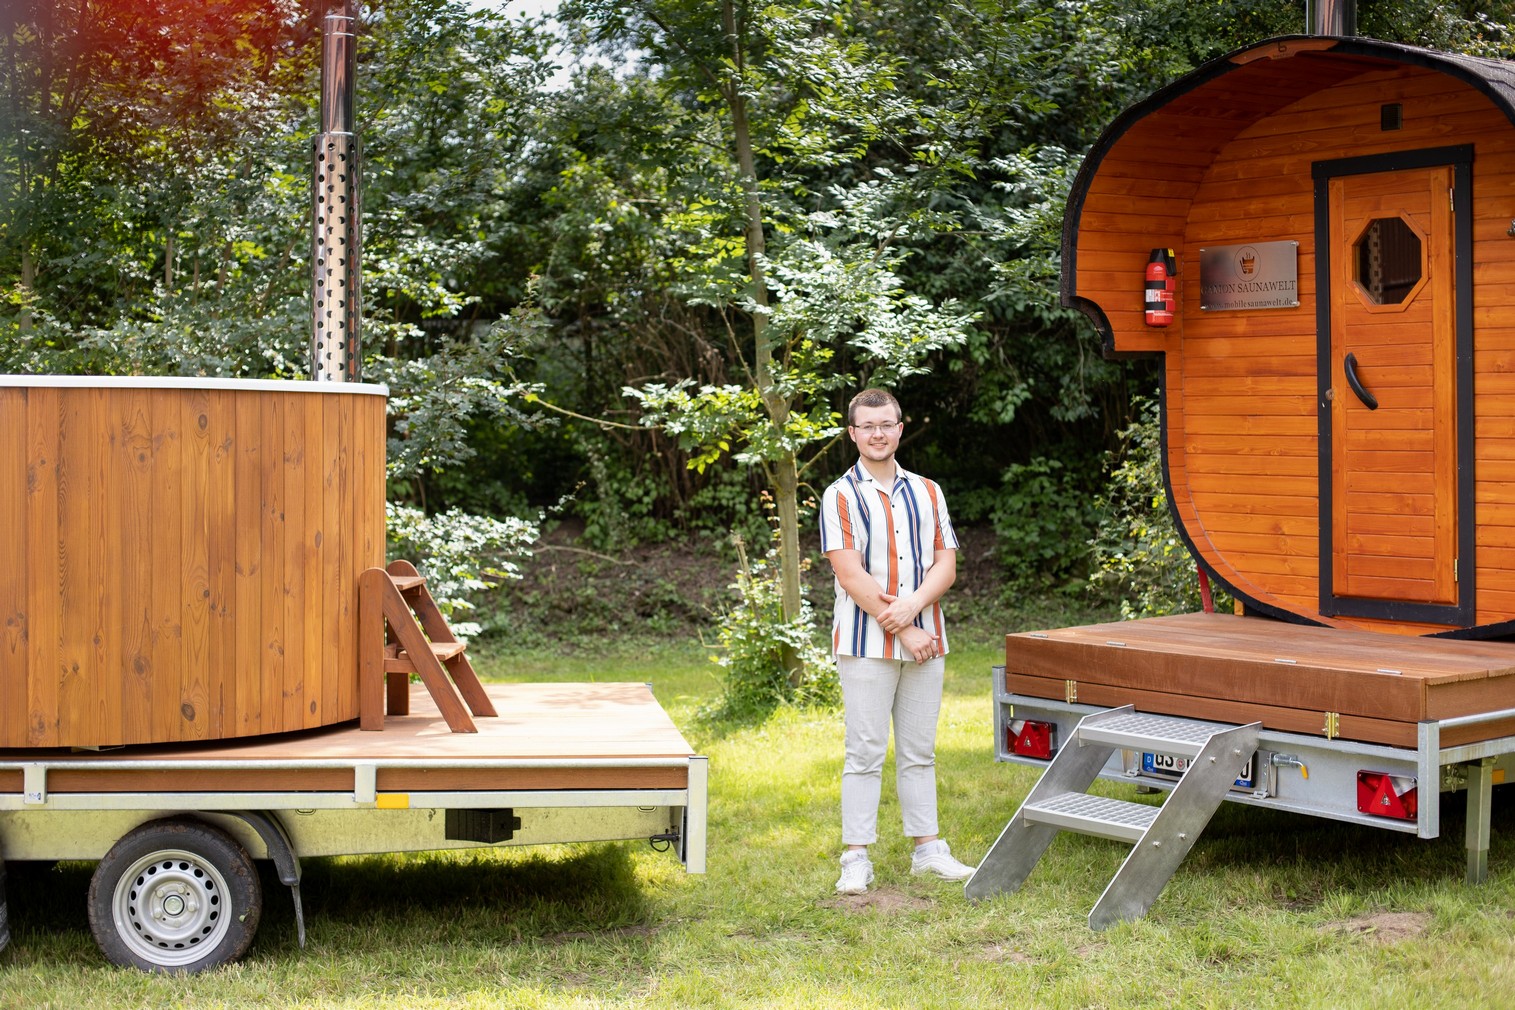 Hier sieht man drei mobile Saunas